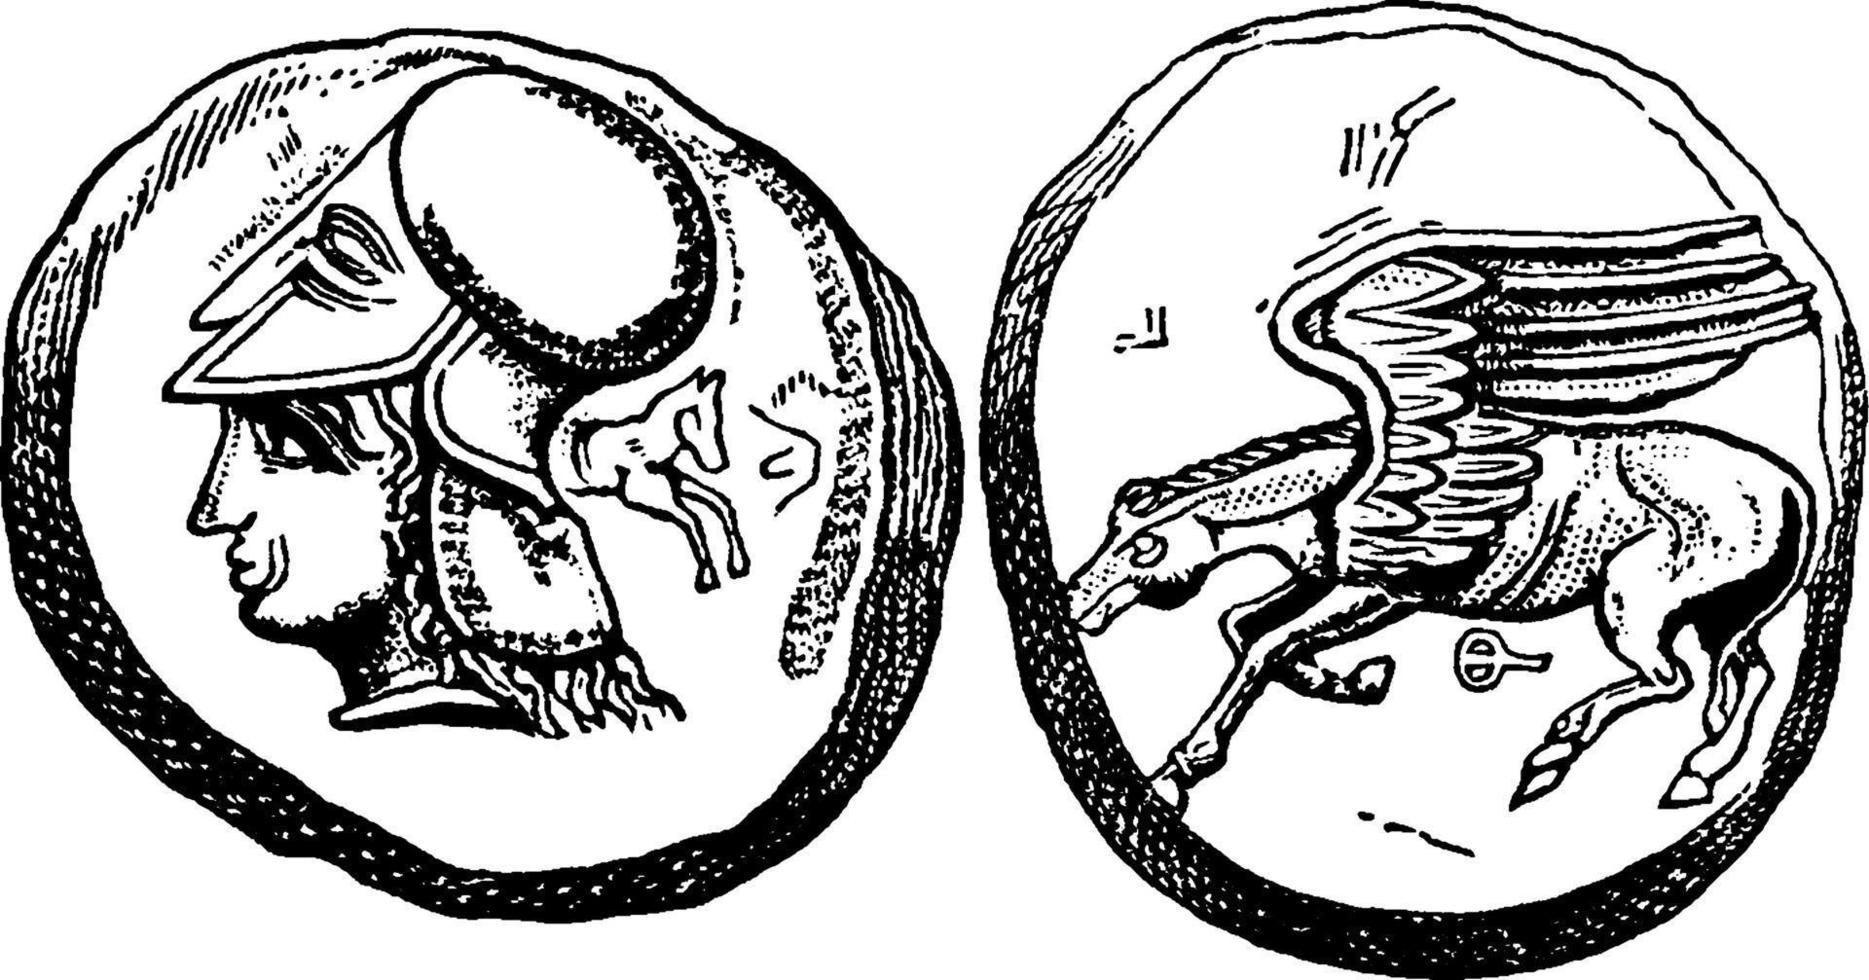 moeda de corinto, ilustração vintage. vetor